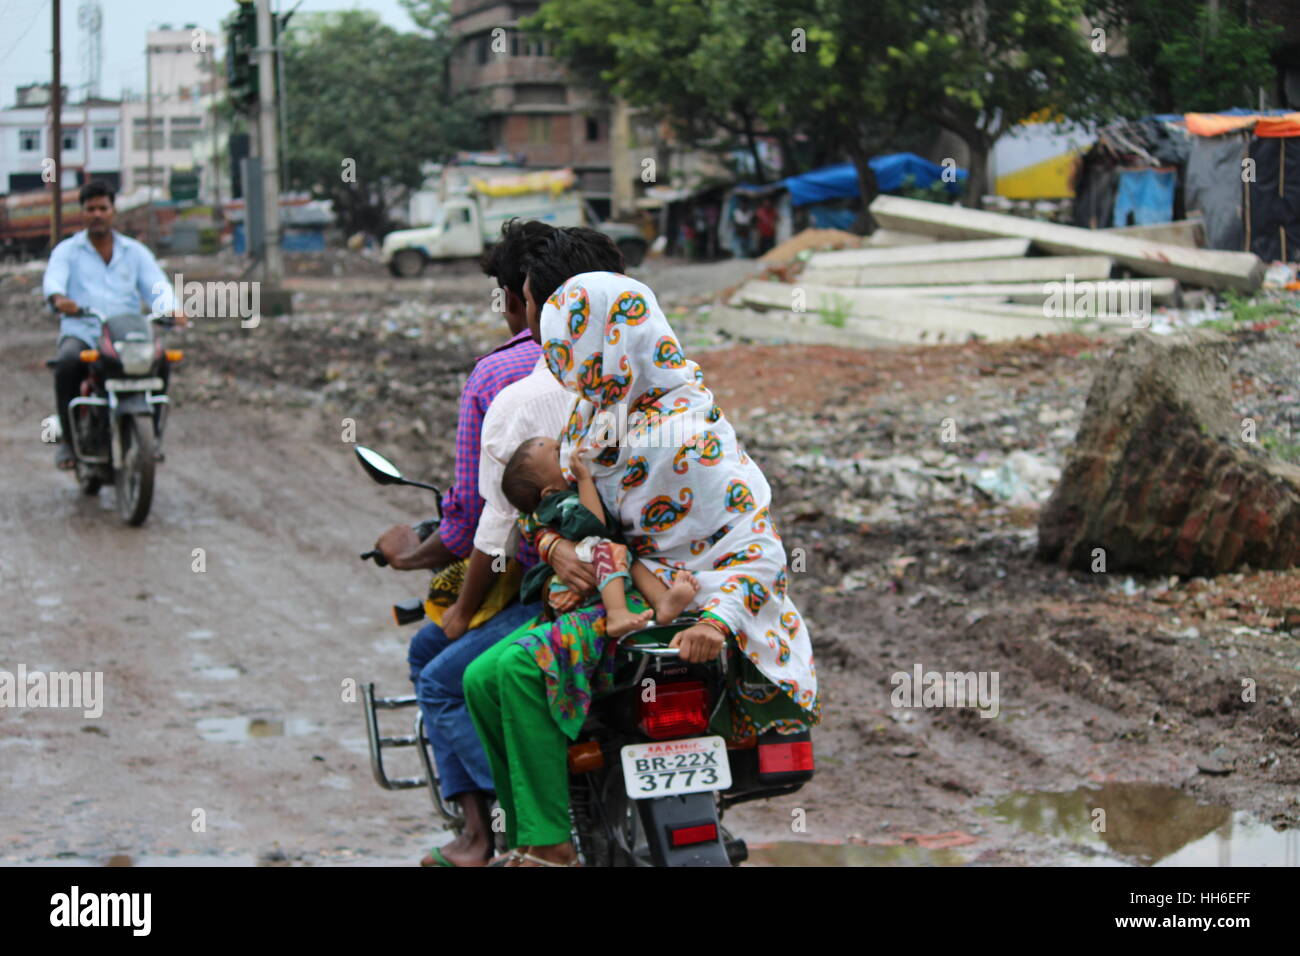 Indien-Fahrt für Motorrad / Stockfoto